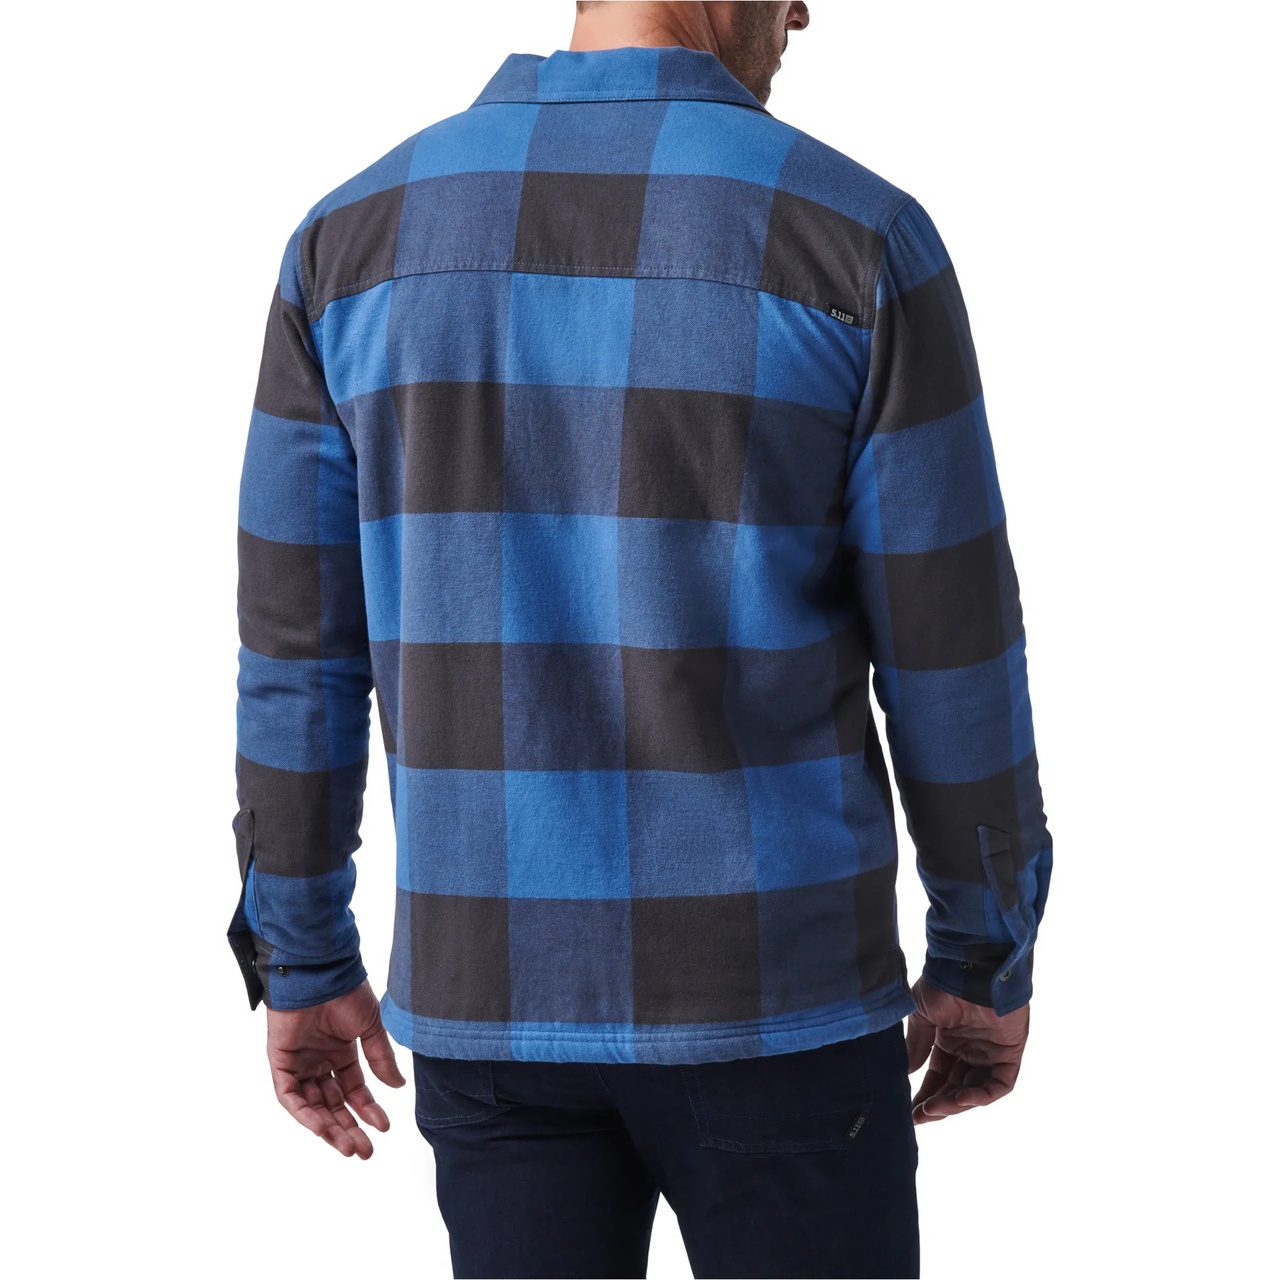 Seth Shirt Jacket Cobalt Blue Plaid, L